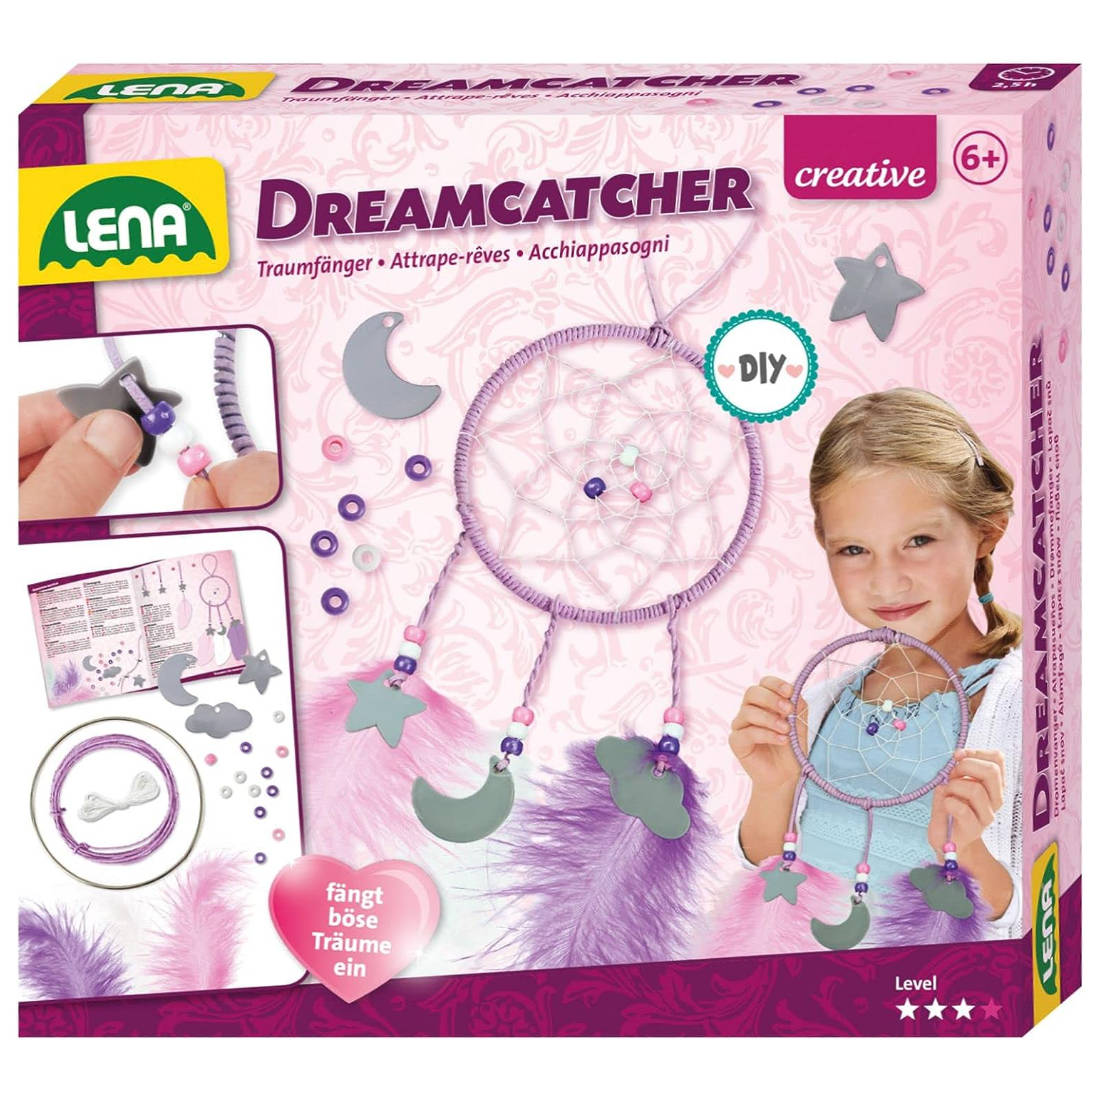 Creative Dreamcatcher Traumfänger Bastelset